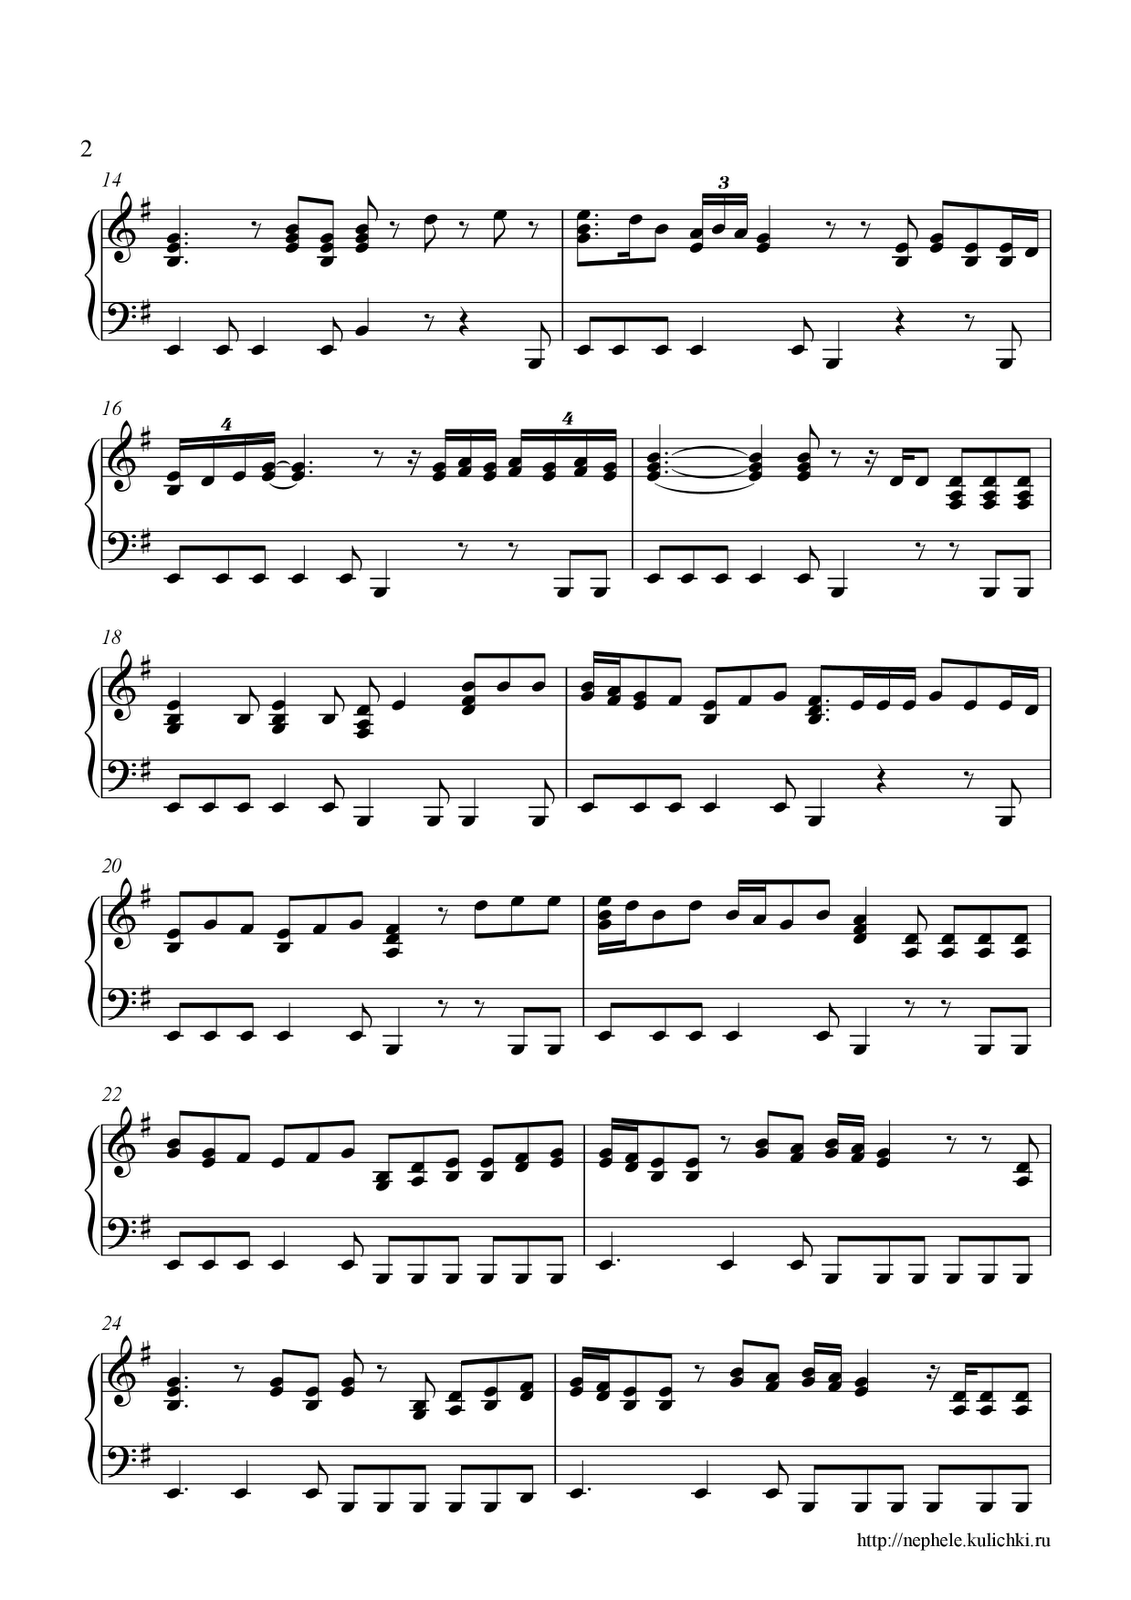 Partitura para piano de Fallin de Alicia Keys | Partituras de piano